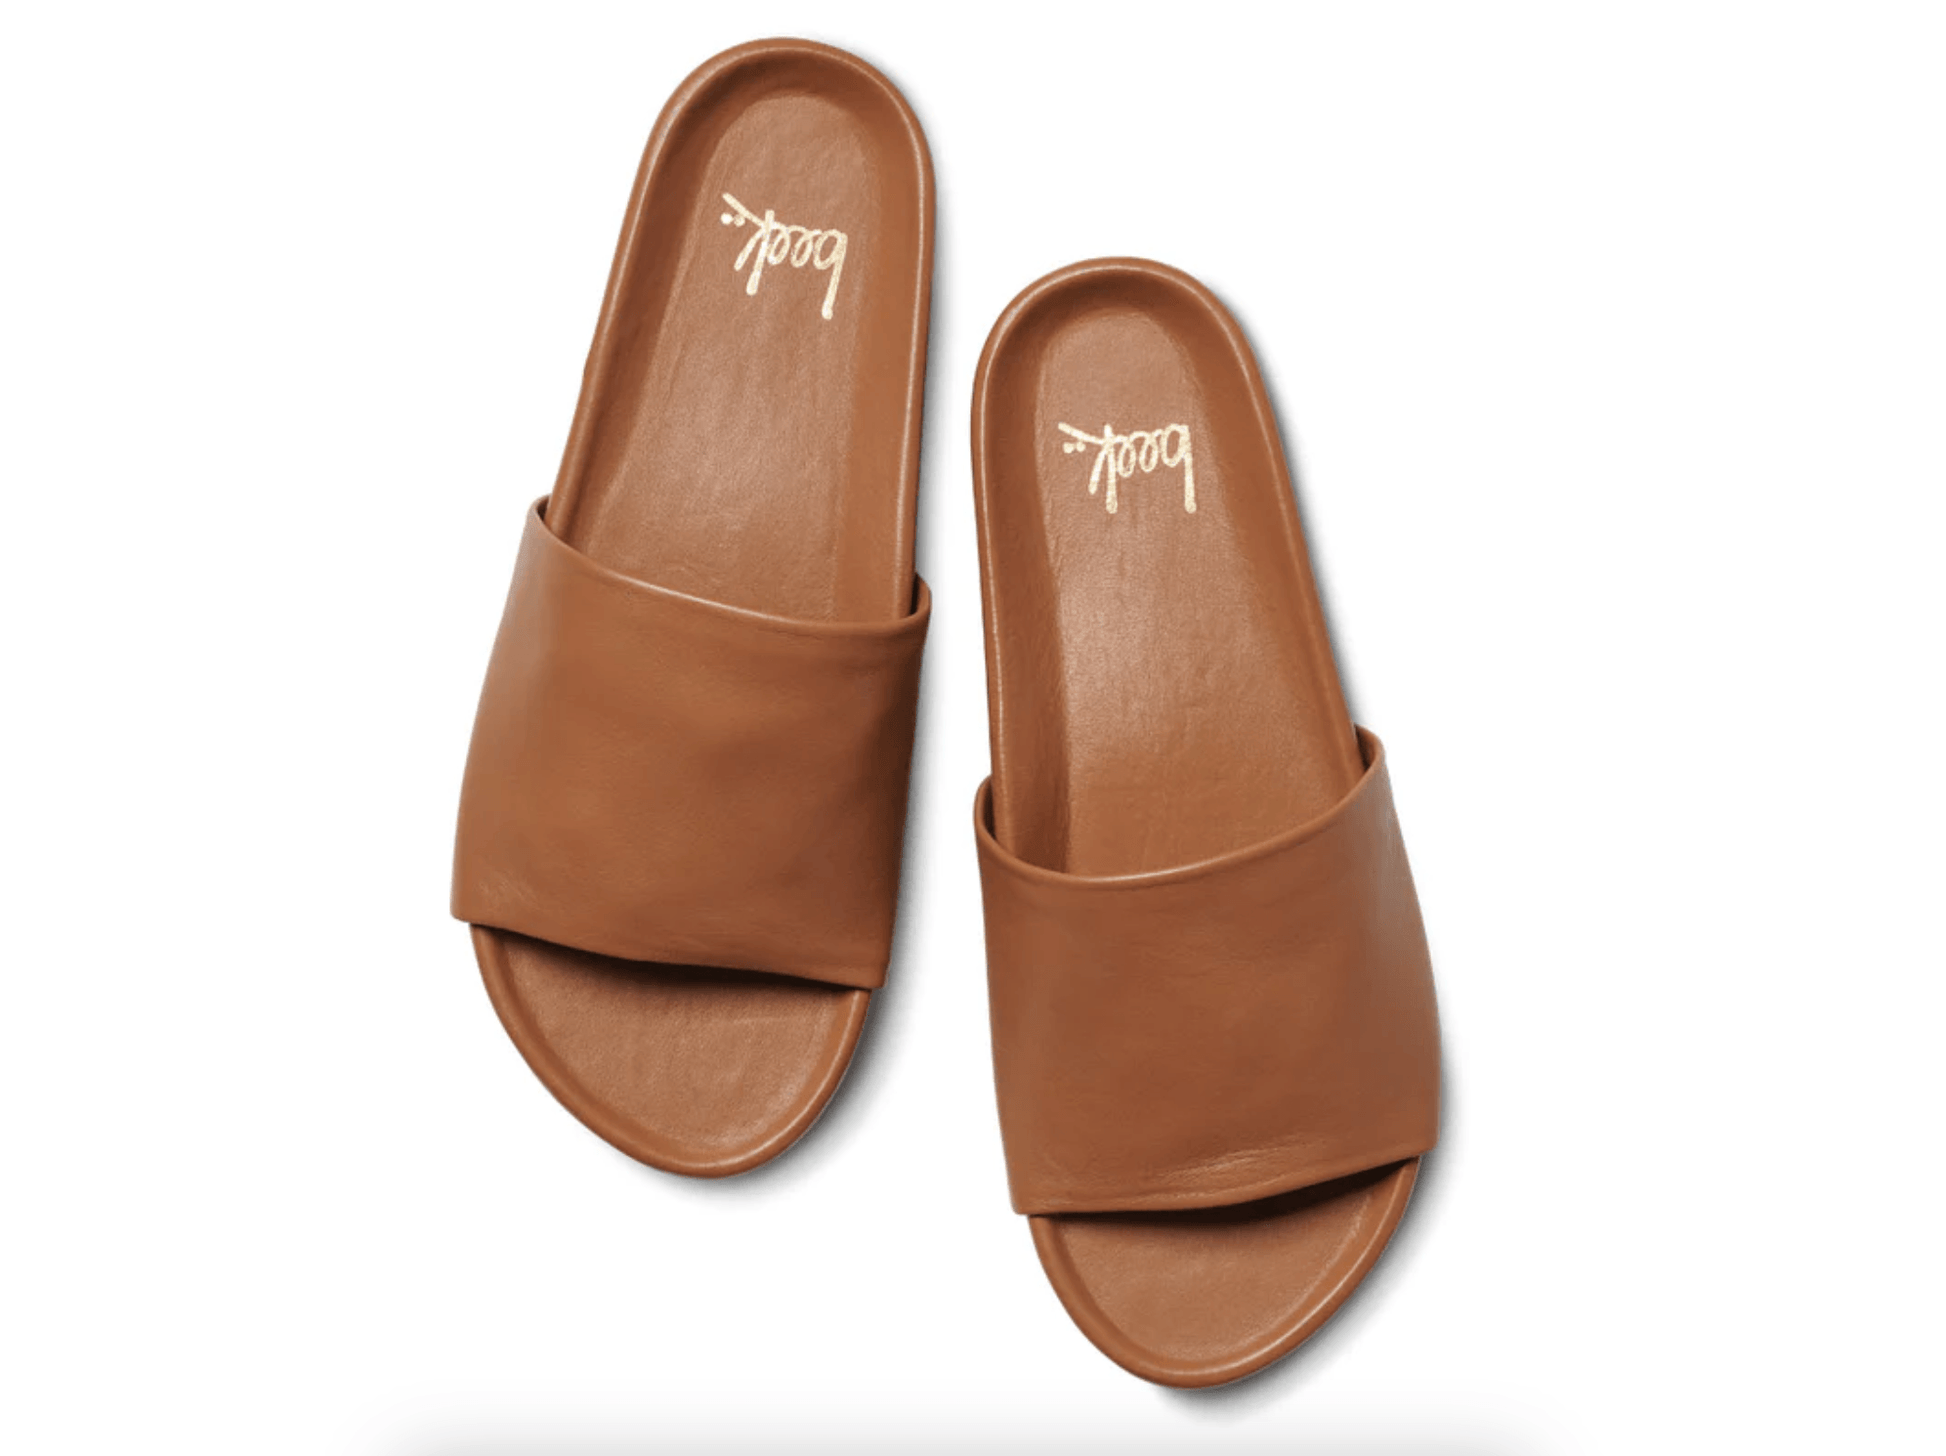 Pelican Tan Leather Slide Sandal by Beek - Haven